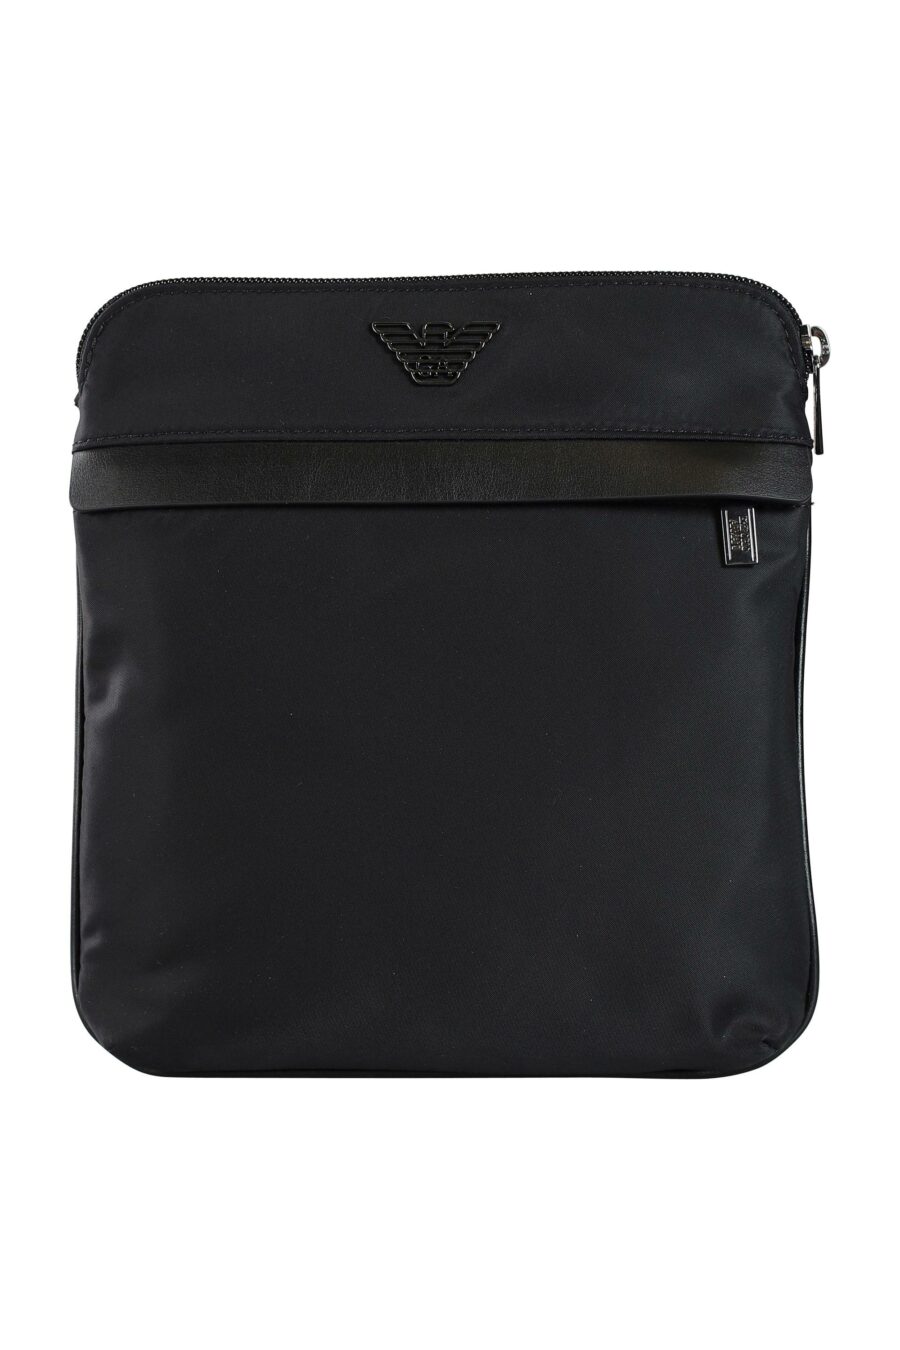 Black shoulder bag with metal mini logo - 8053616709593